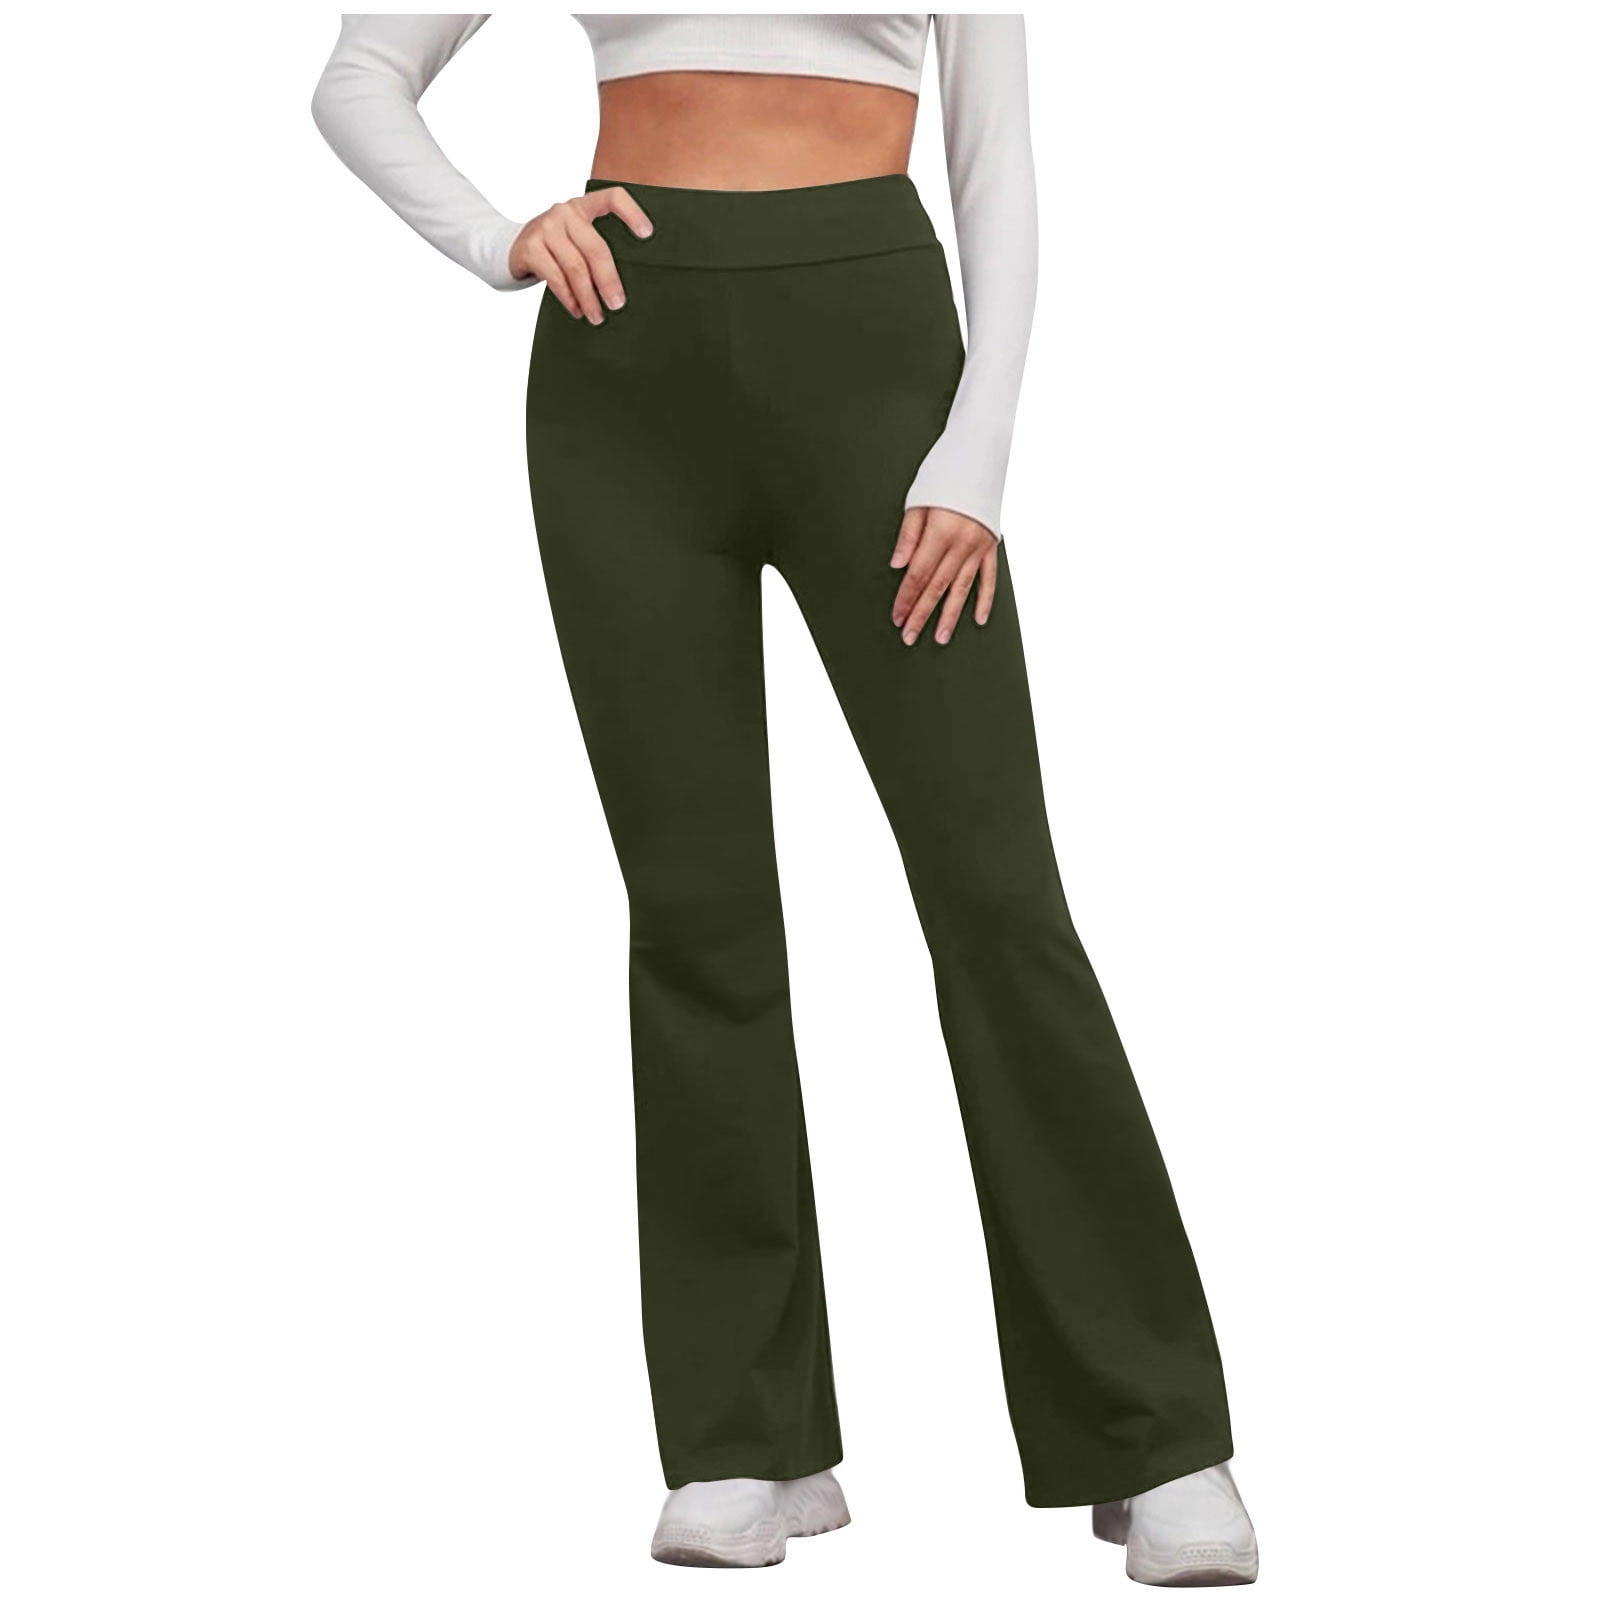 KJIUQ Womens Flare Yoga Dress Pants High Waist Stretch Business Work Pants  Bootcut Leg Slacks Pull on Casual Bell Bottom Trousers(Army Green,XL)